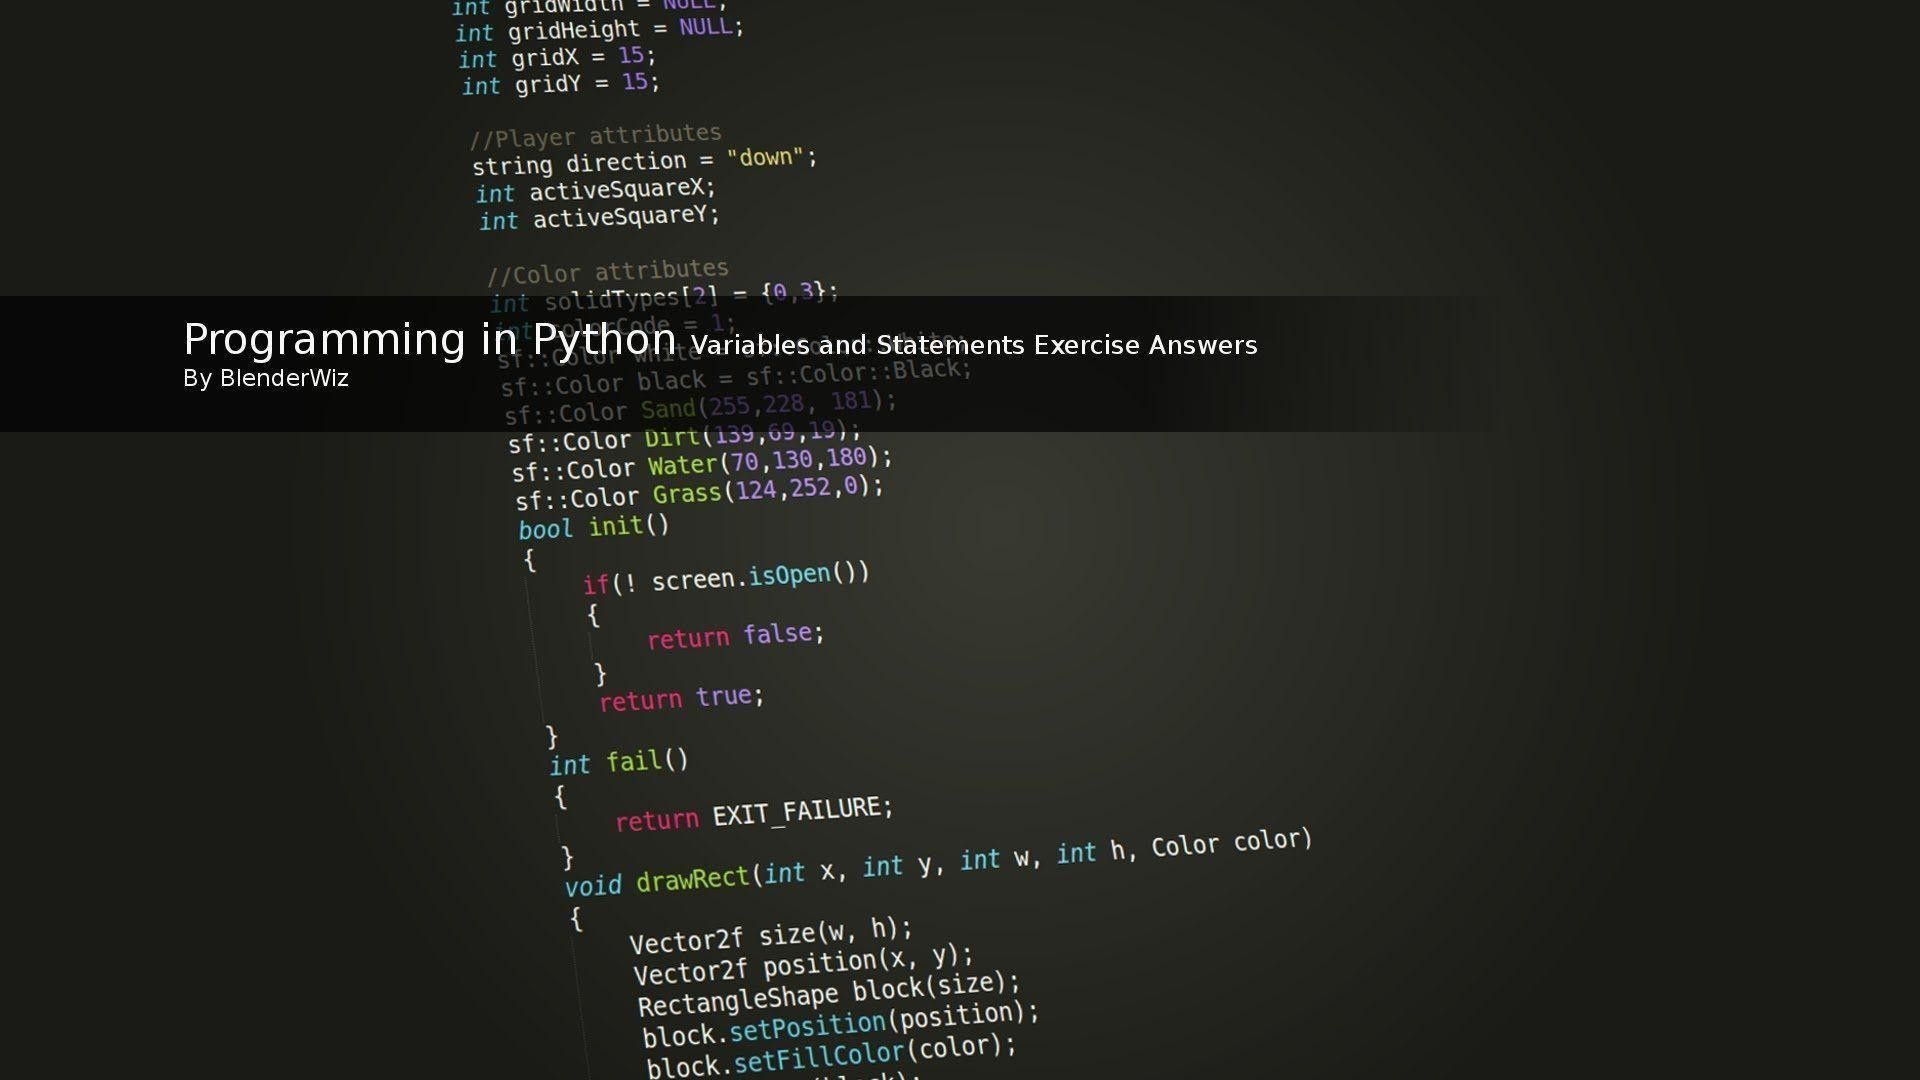 3840x2160] The Python Coder : r/wallpaper